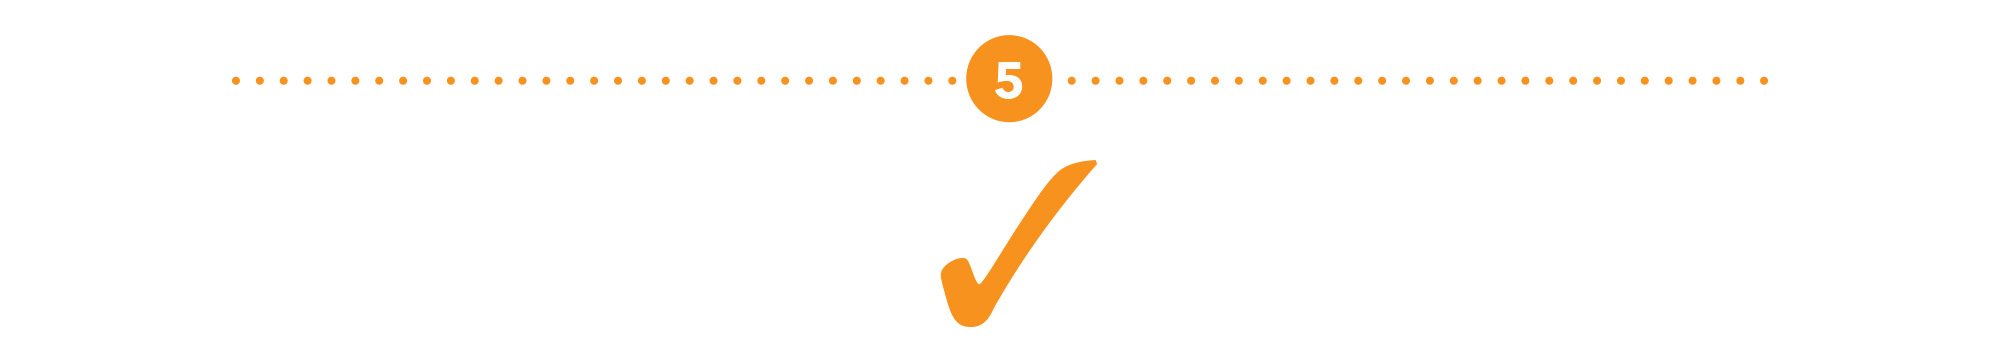 An orange checkmark icon.